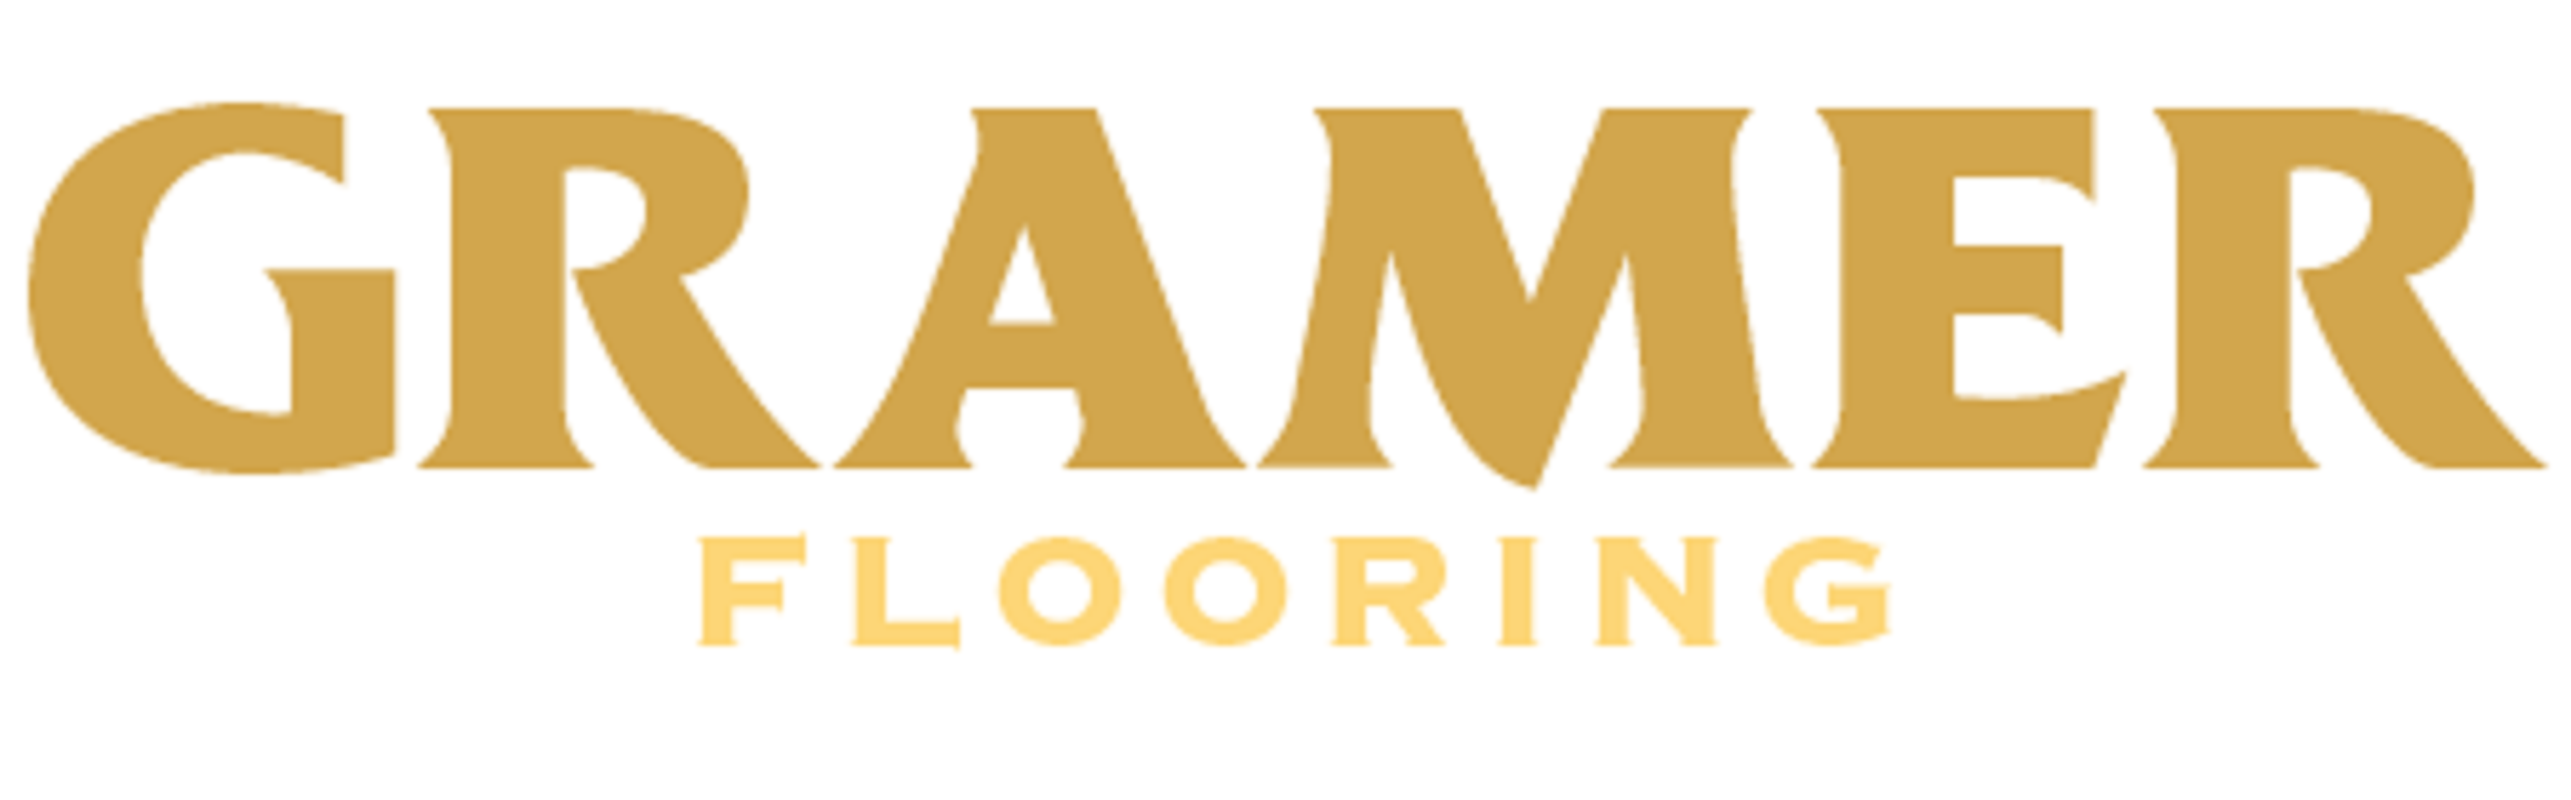 Hardwood Floor Installation Refinishing and Repair Cincinnati